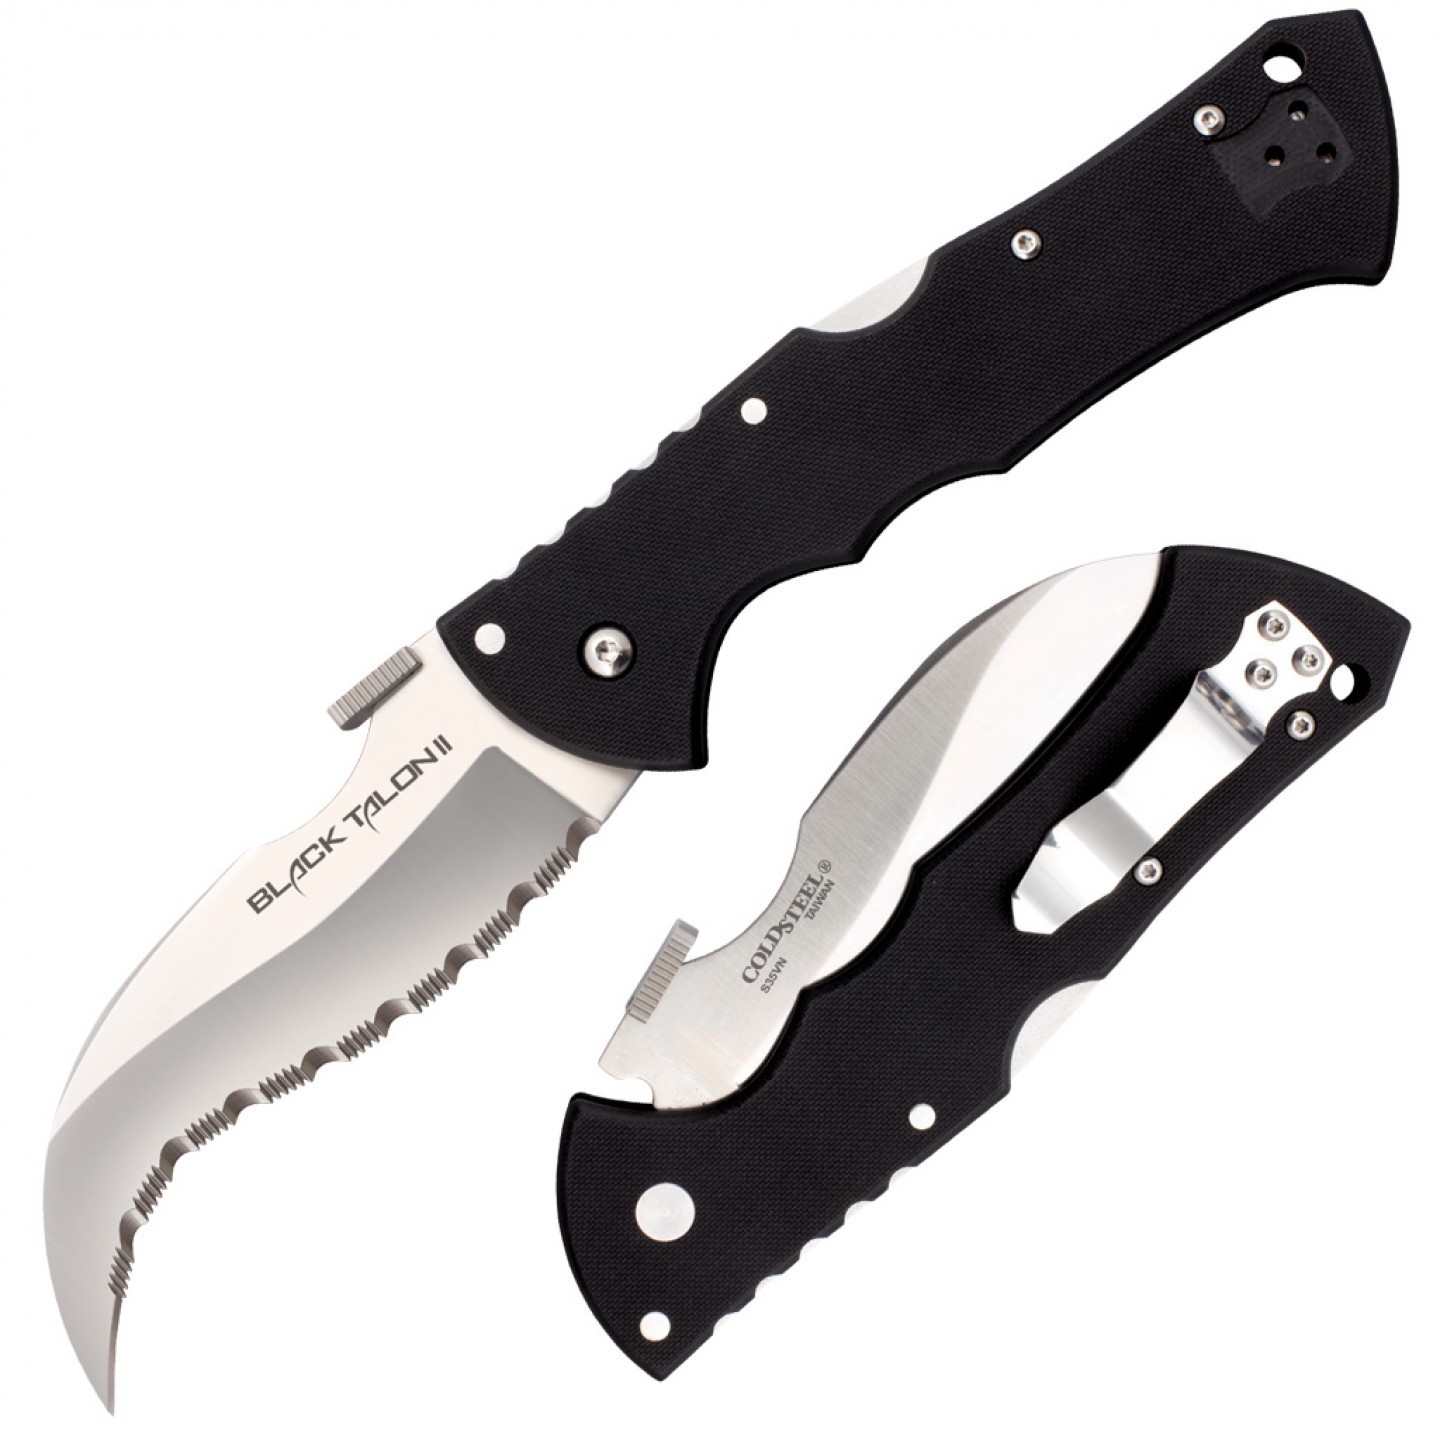 Складной нож Black Talon II Serrated Edge - Cold Steel 22BS, сталь CPM-S35VN, рукоять G-10